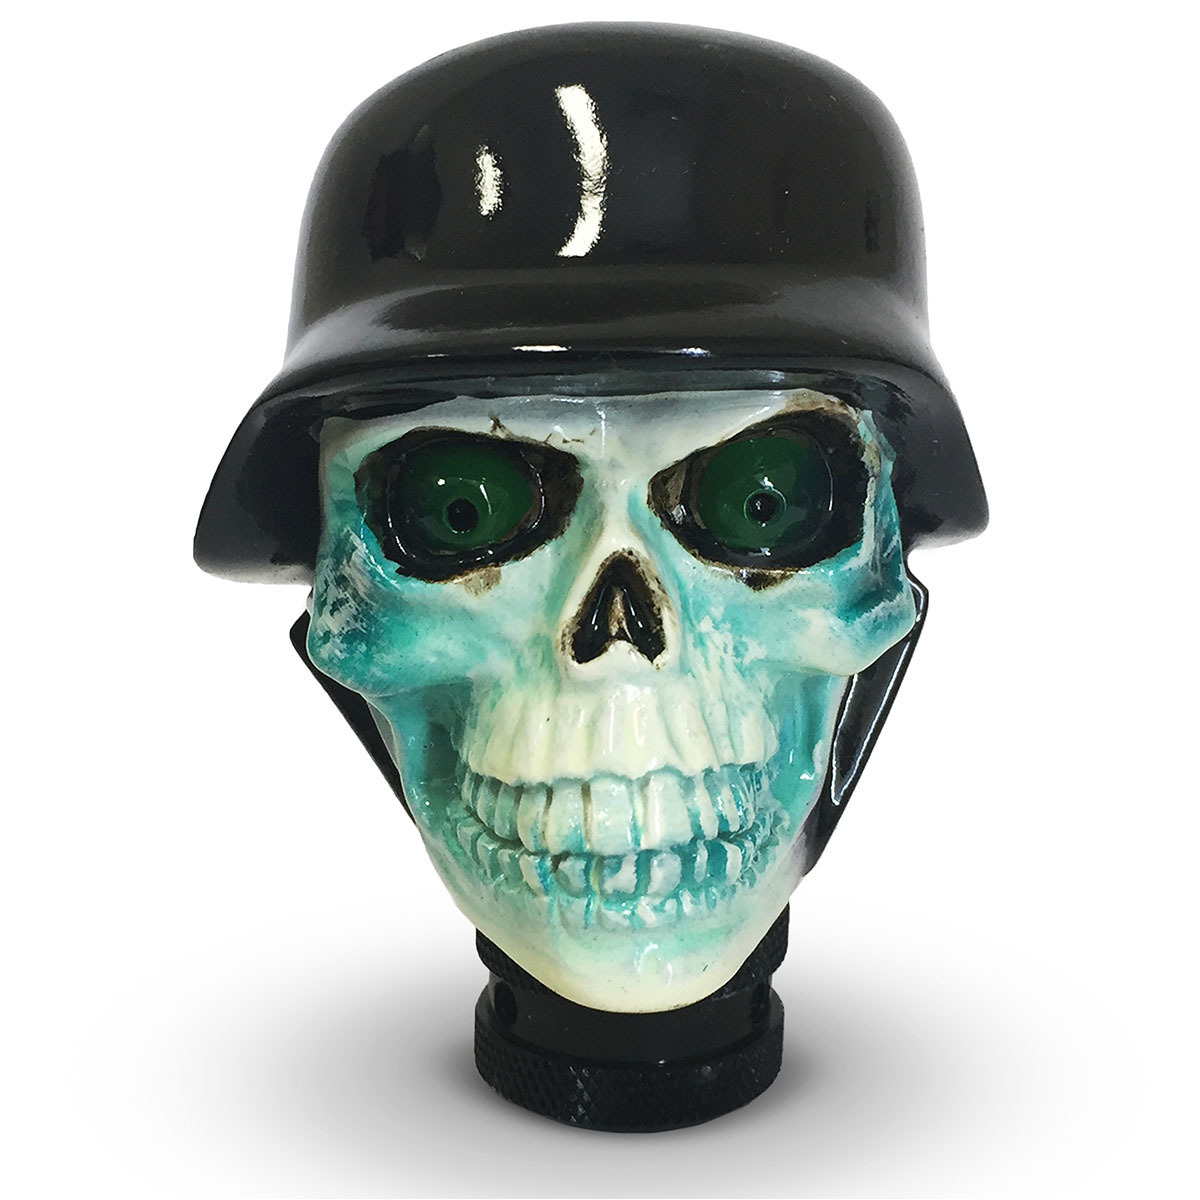 Skull Gear Knob with Helmet White